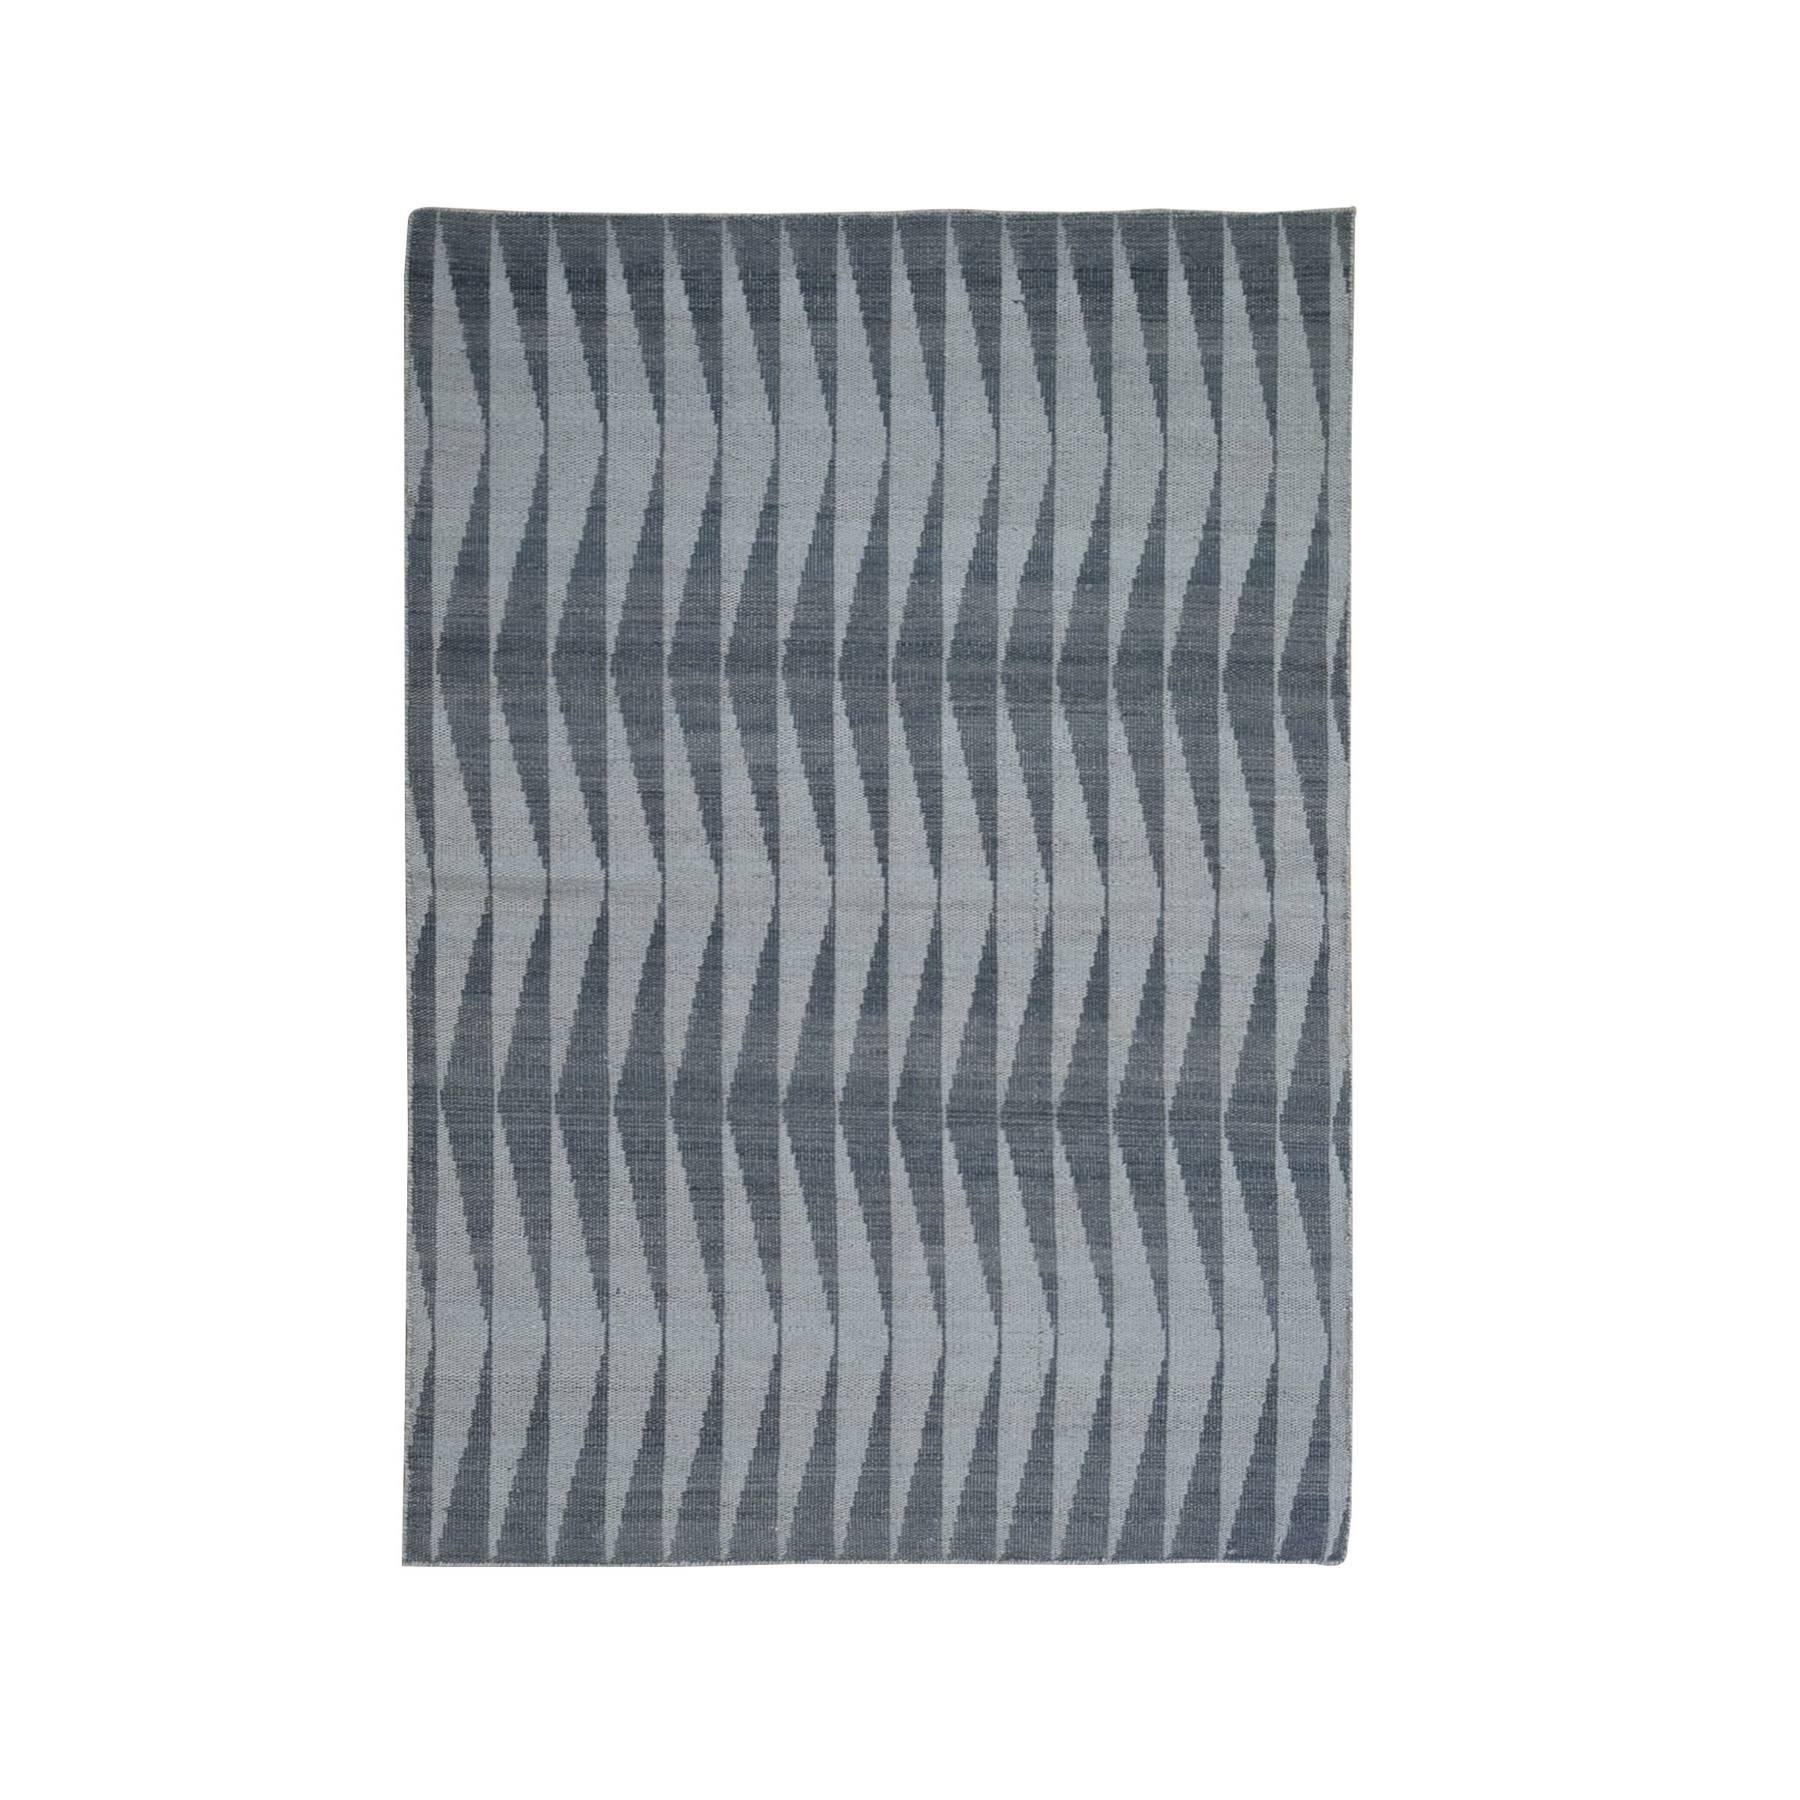 Flat-Weave-Hand-Woven-Rug-330395